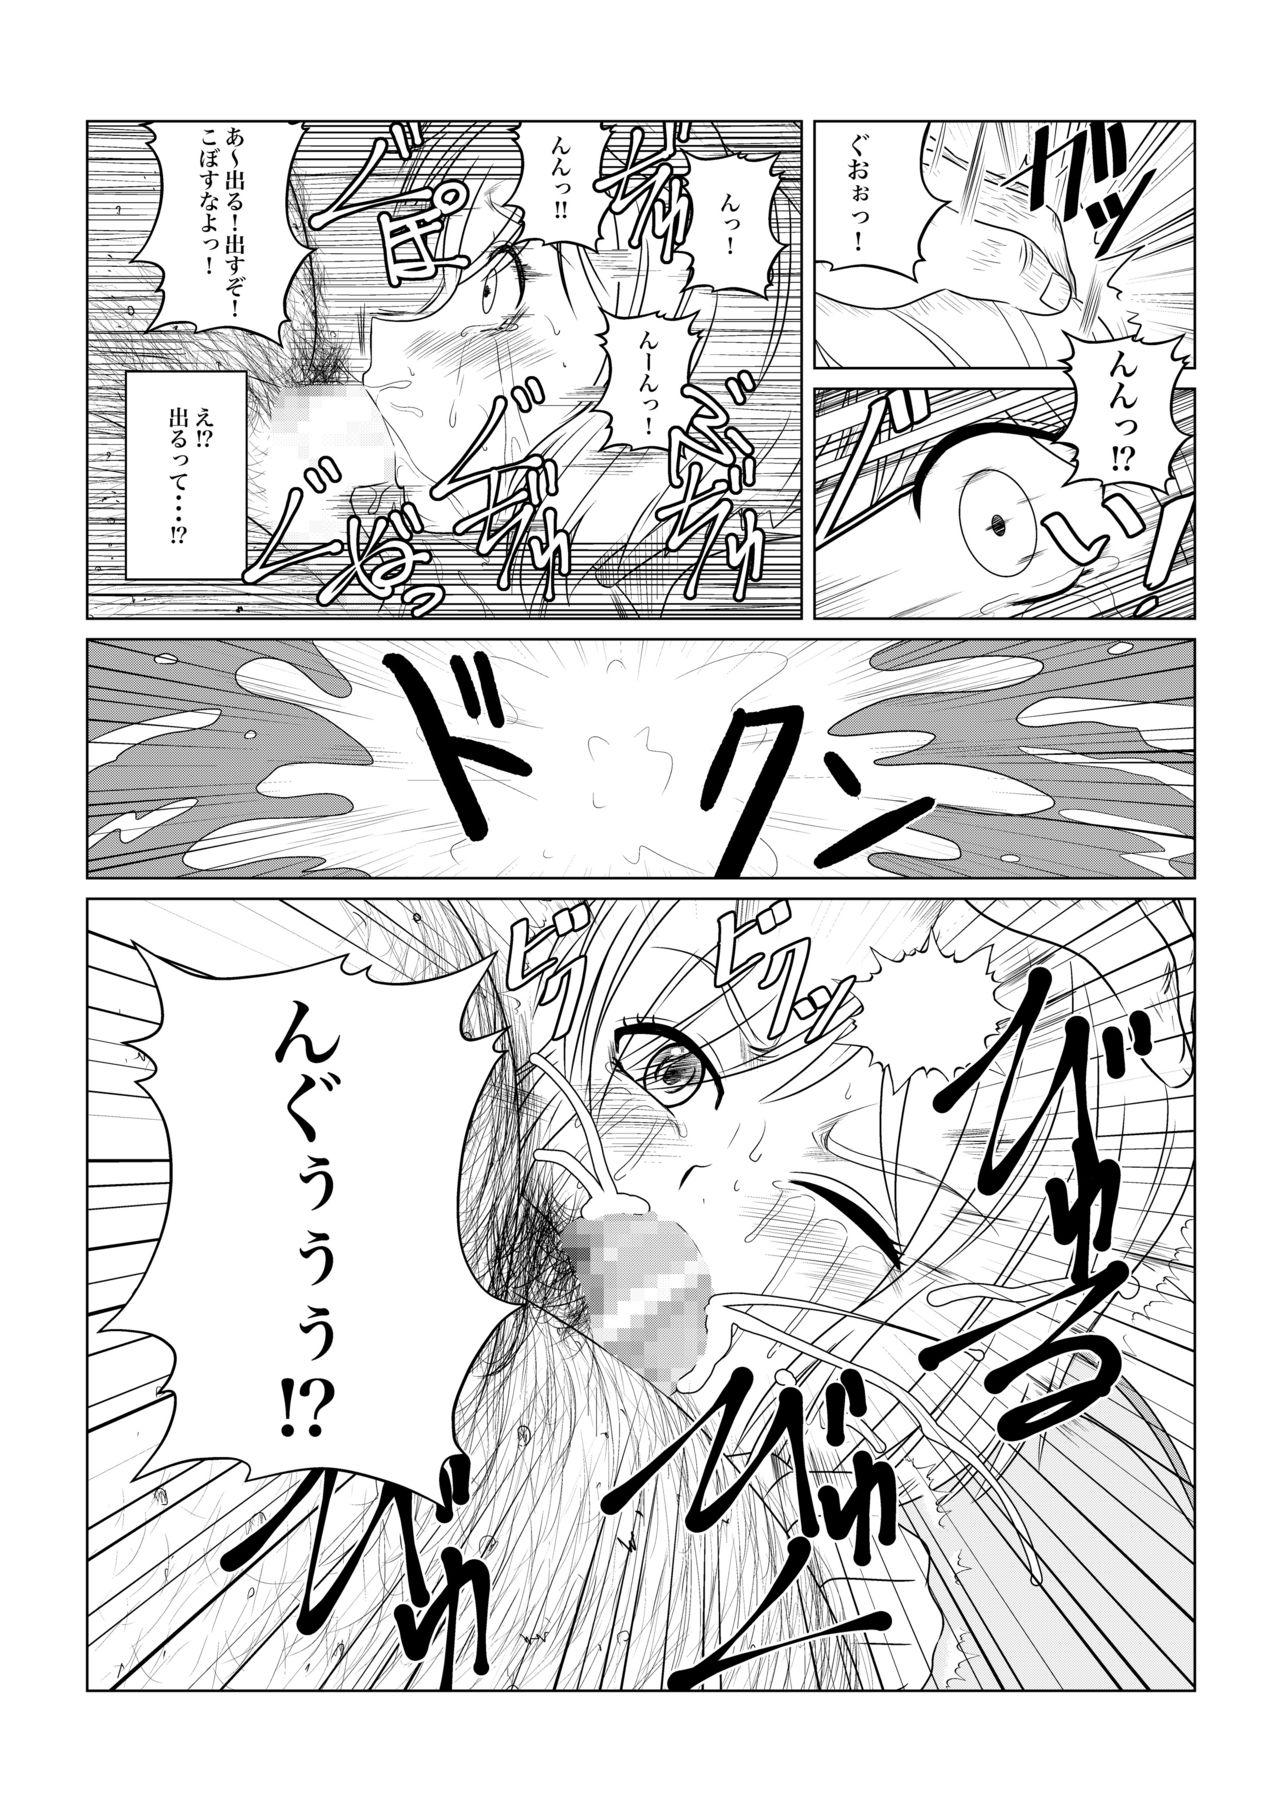 Free Amature Porn Gekka Midarezaki - Tales of vesperia Shot - Page 12